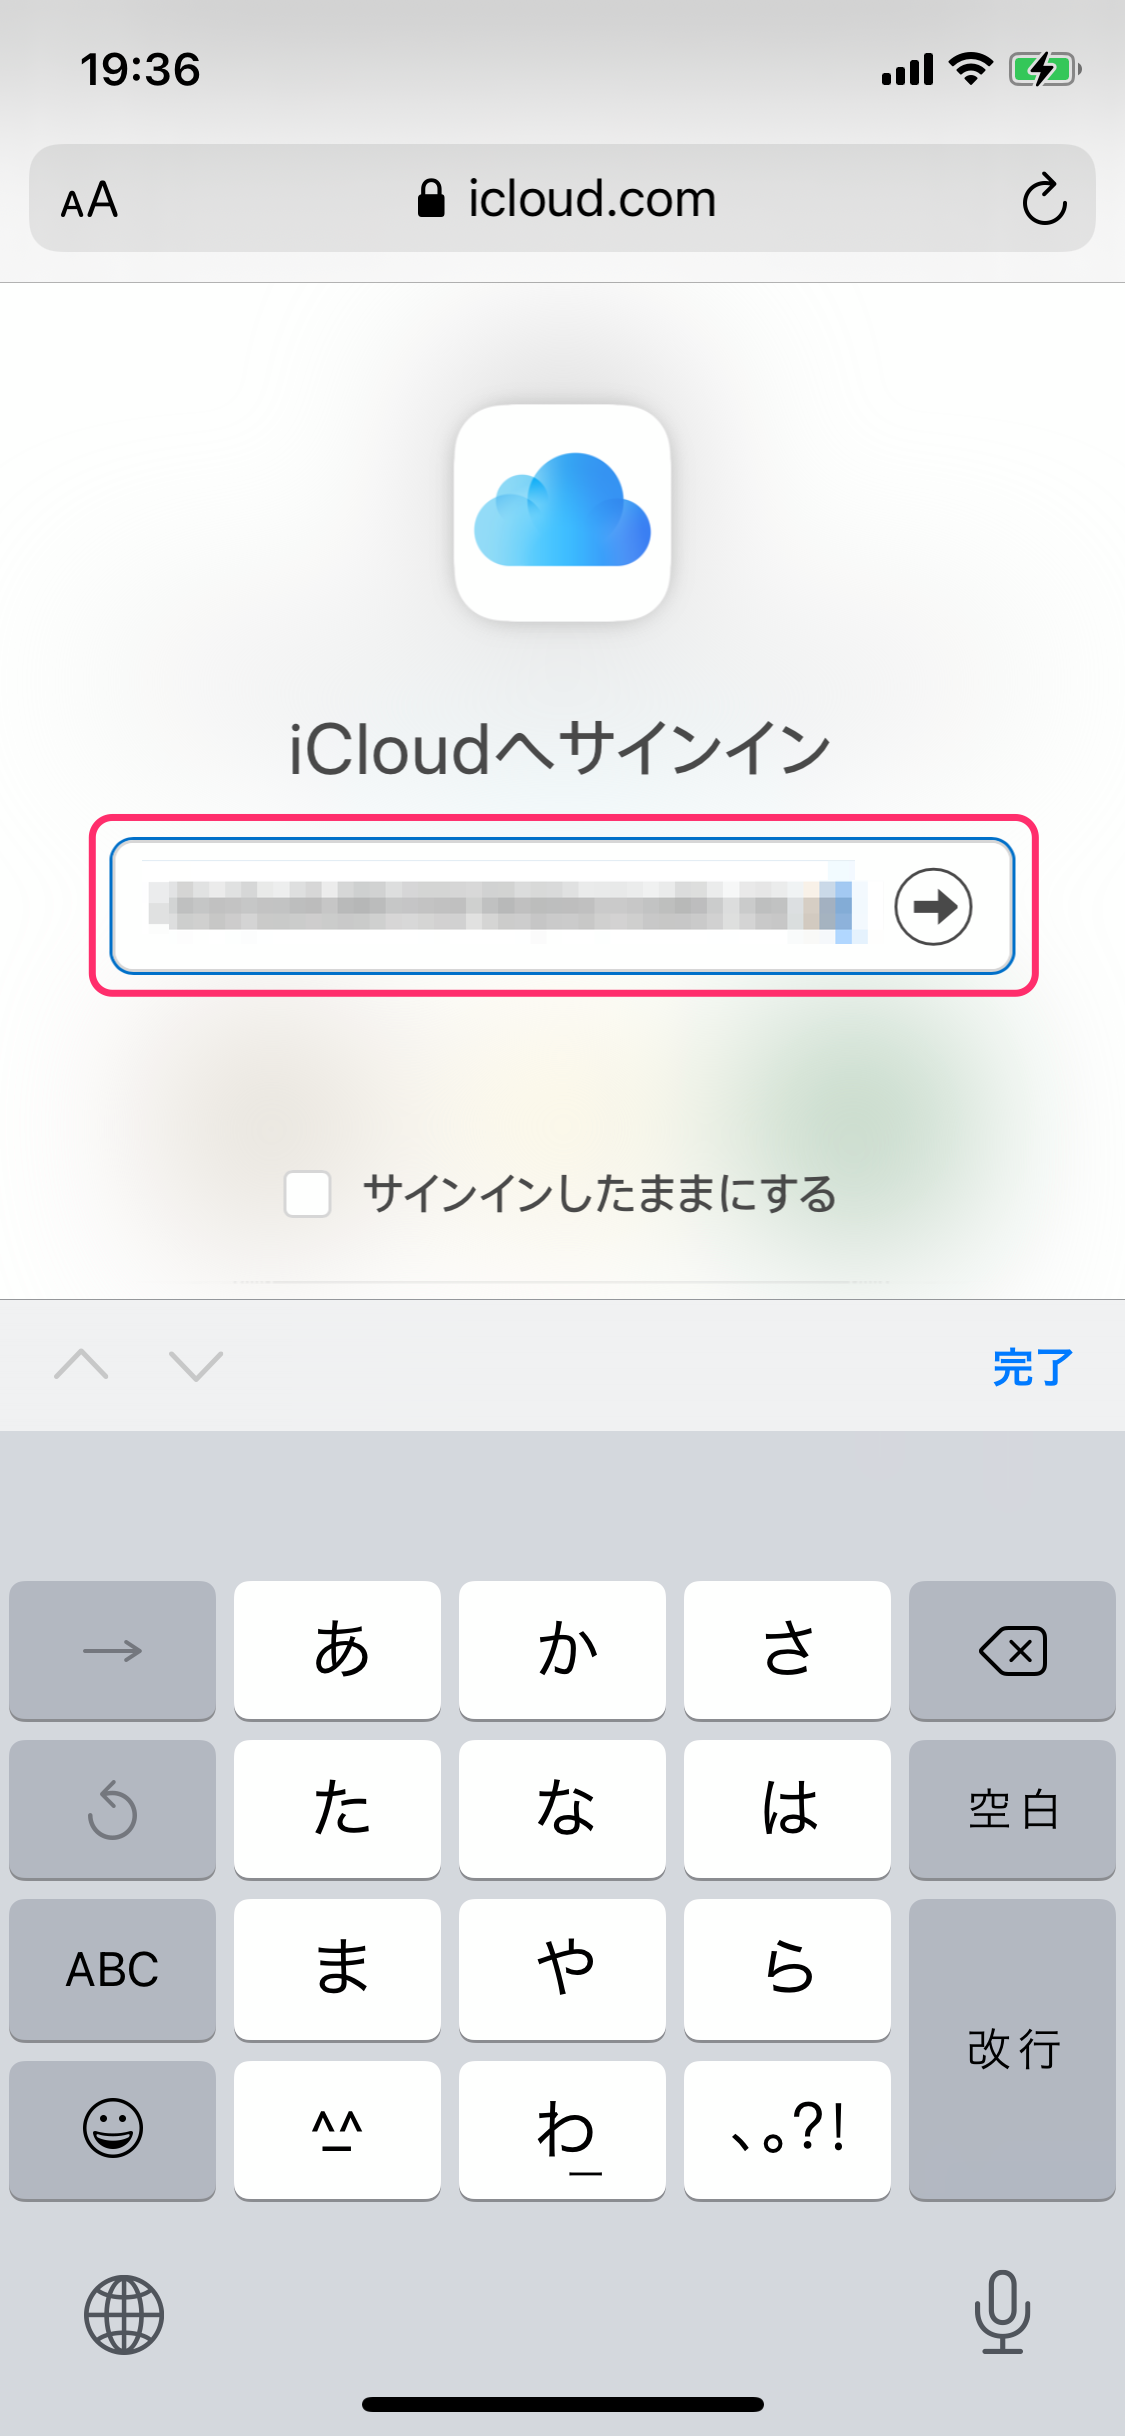 iCloud Apple ID